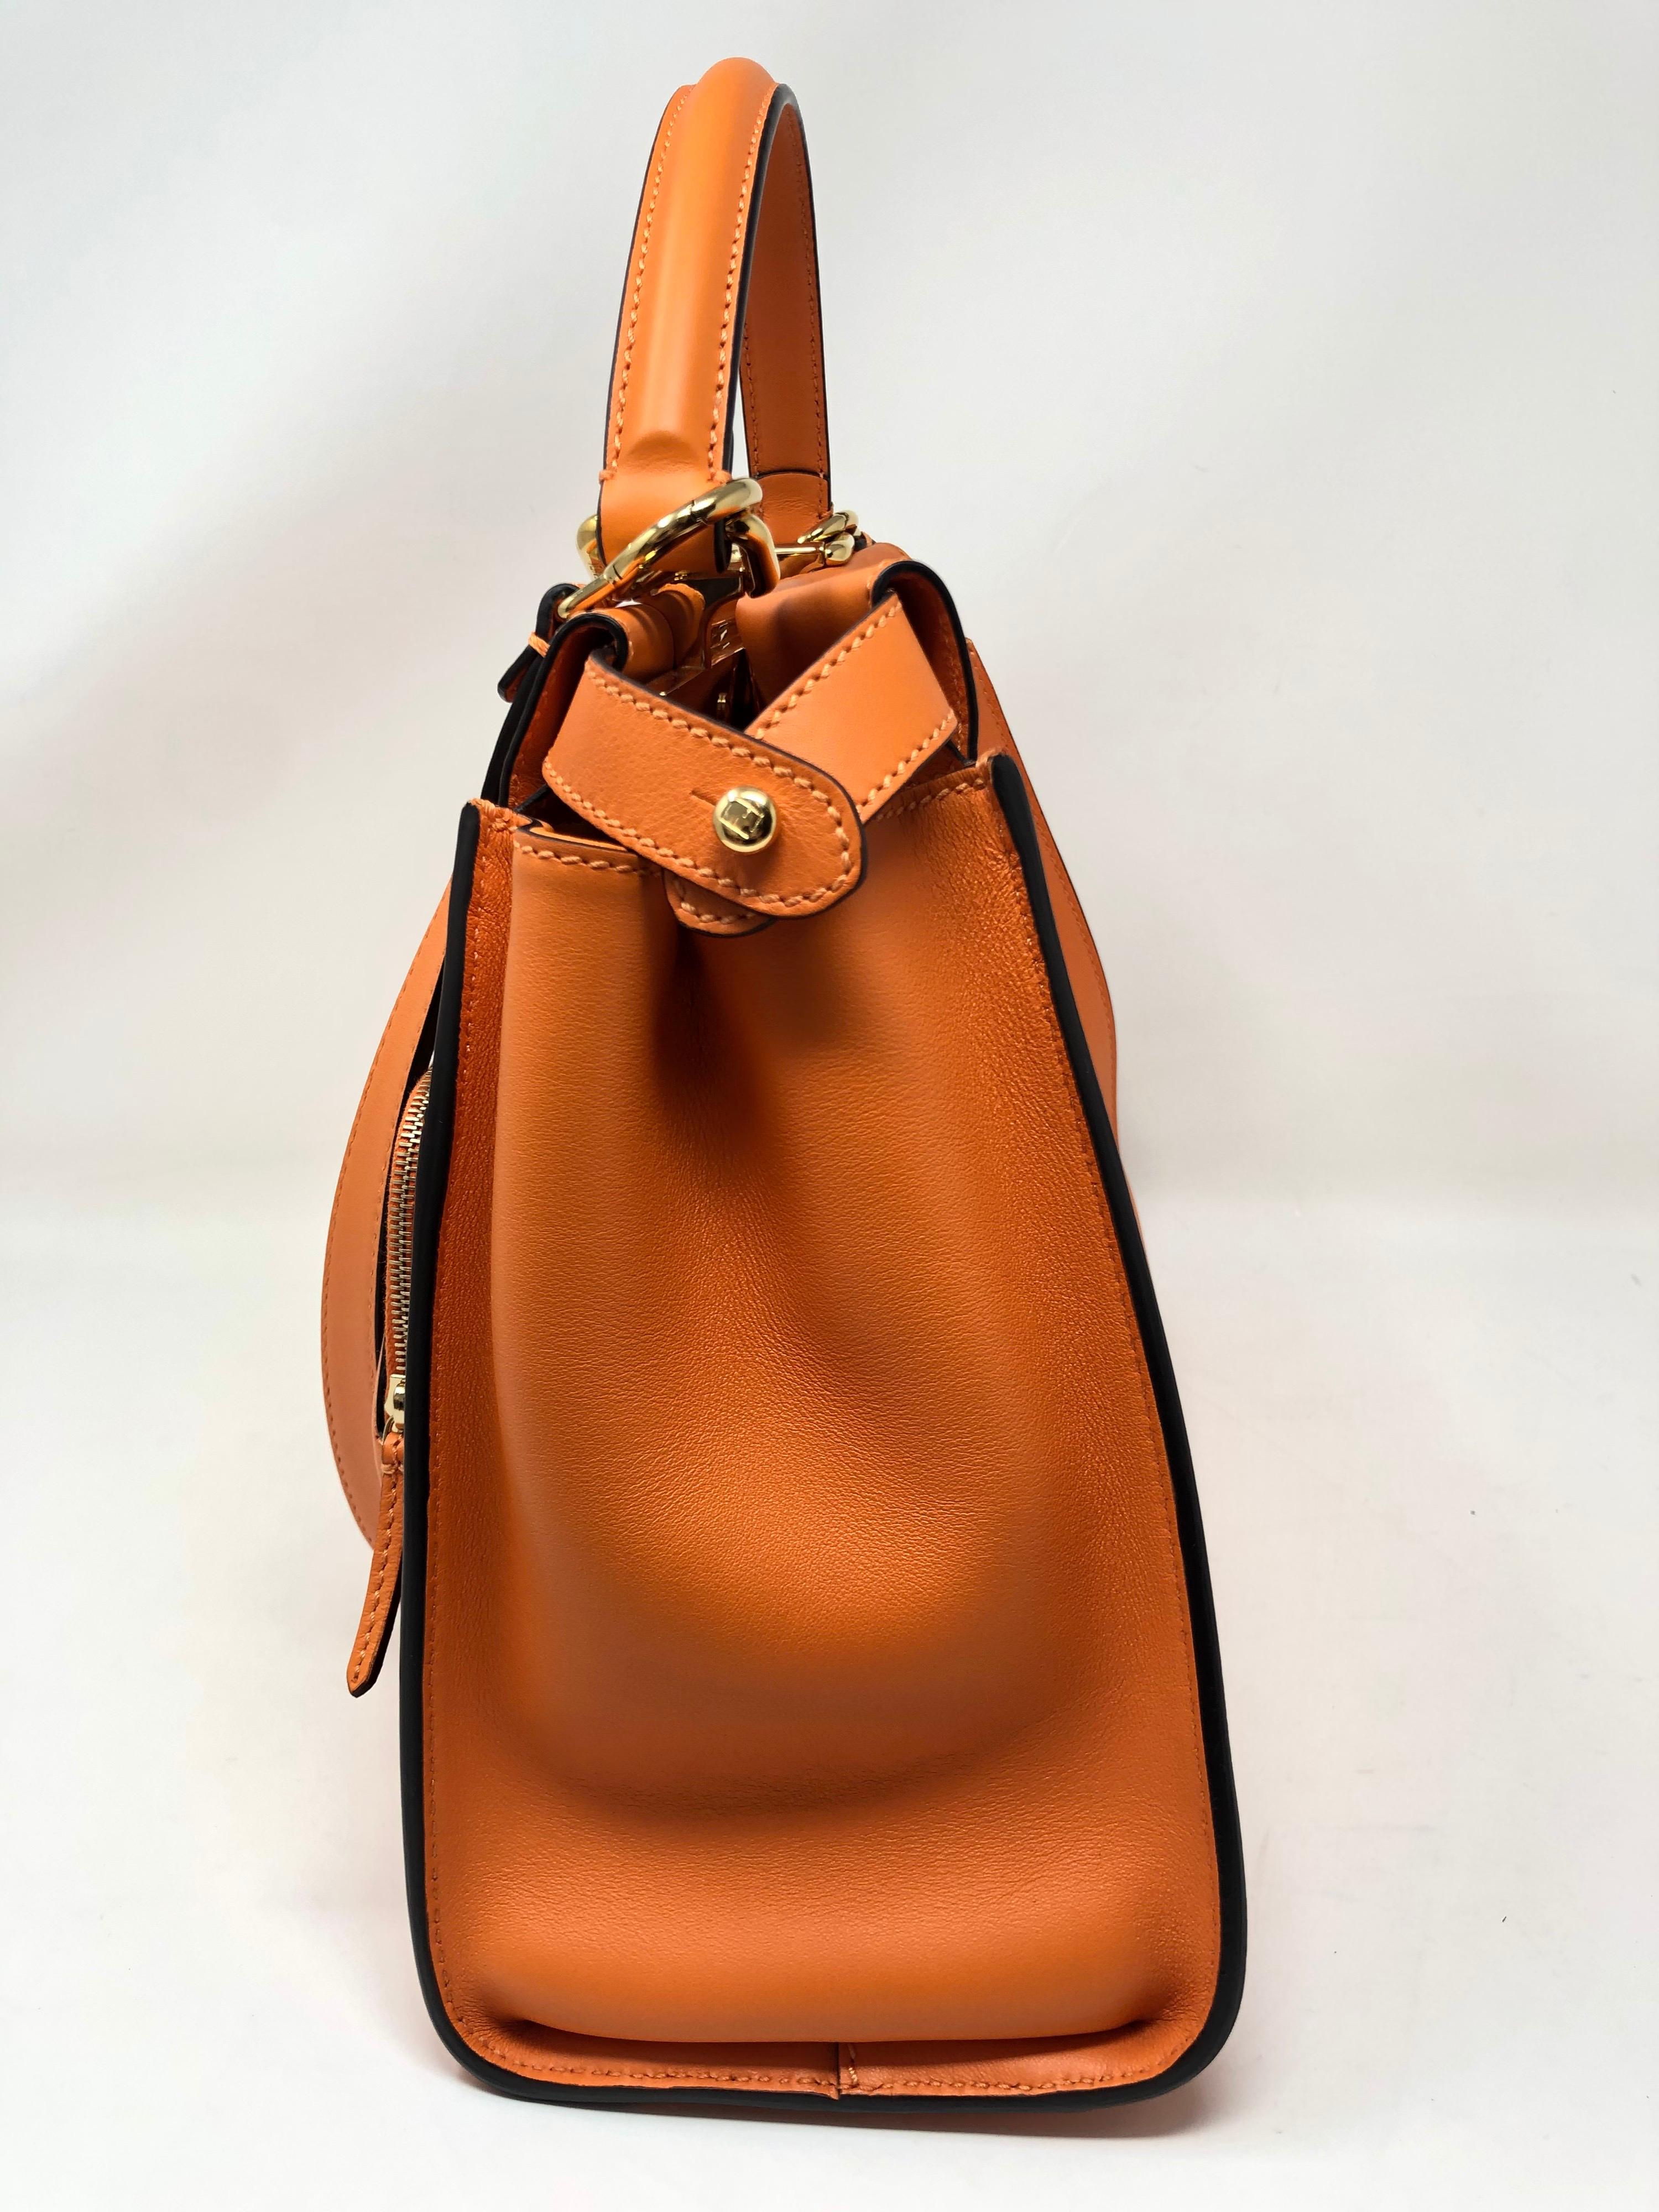 Fendi Peekaboo Orange Leather Bag  3